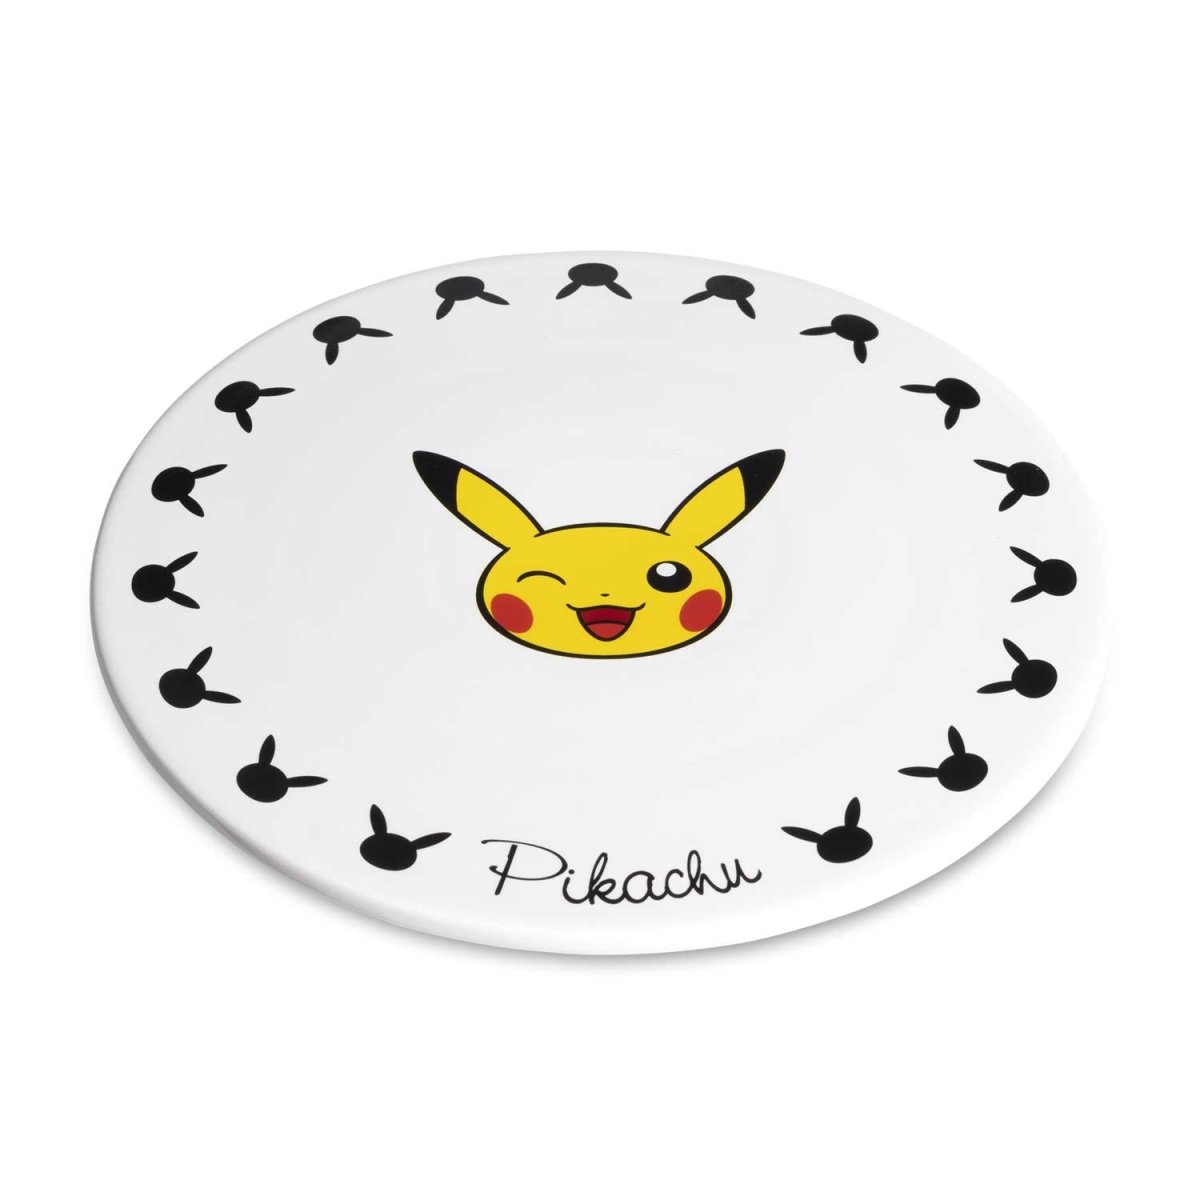 Pikachu Kitchen Ceramic Trivet | Pokémon Center Official